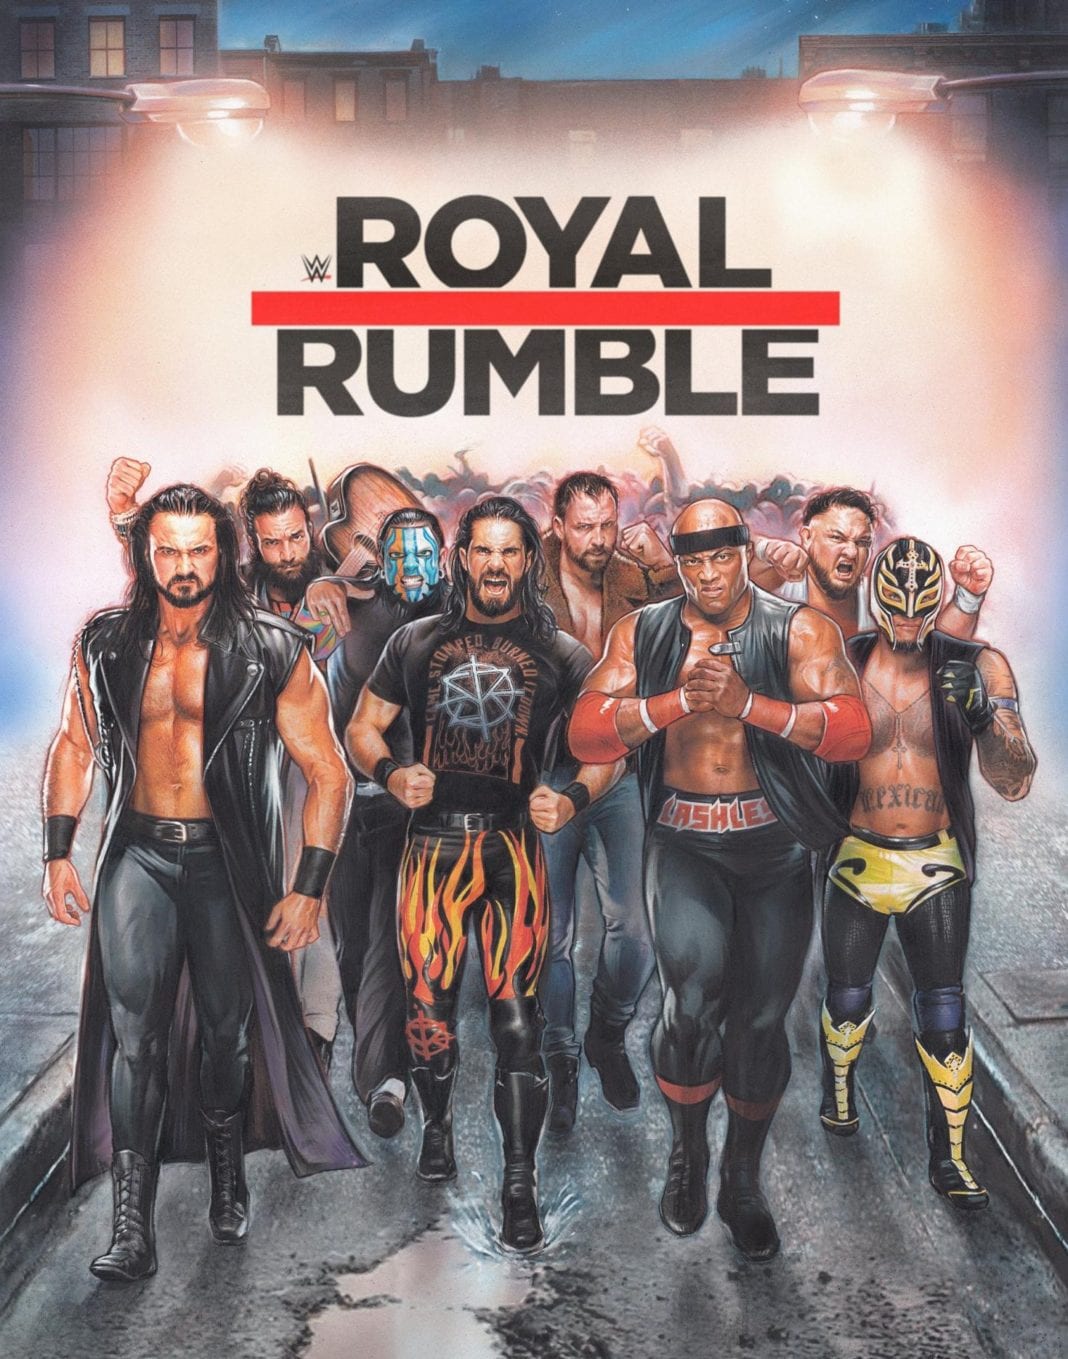 Royal Rumble 2019 Review and Match Ratings - eWrestlingNews.com